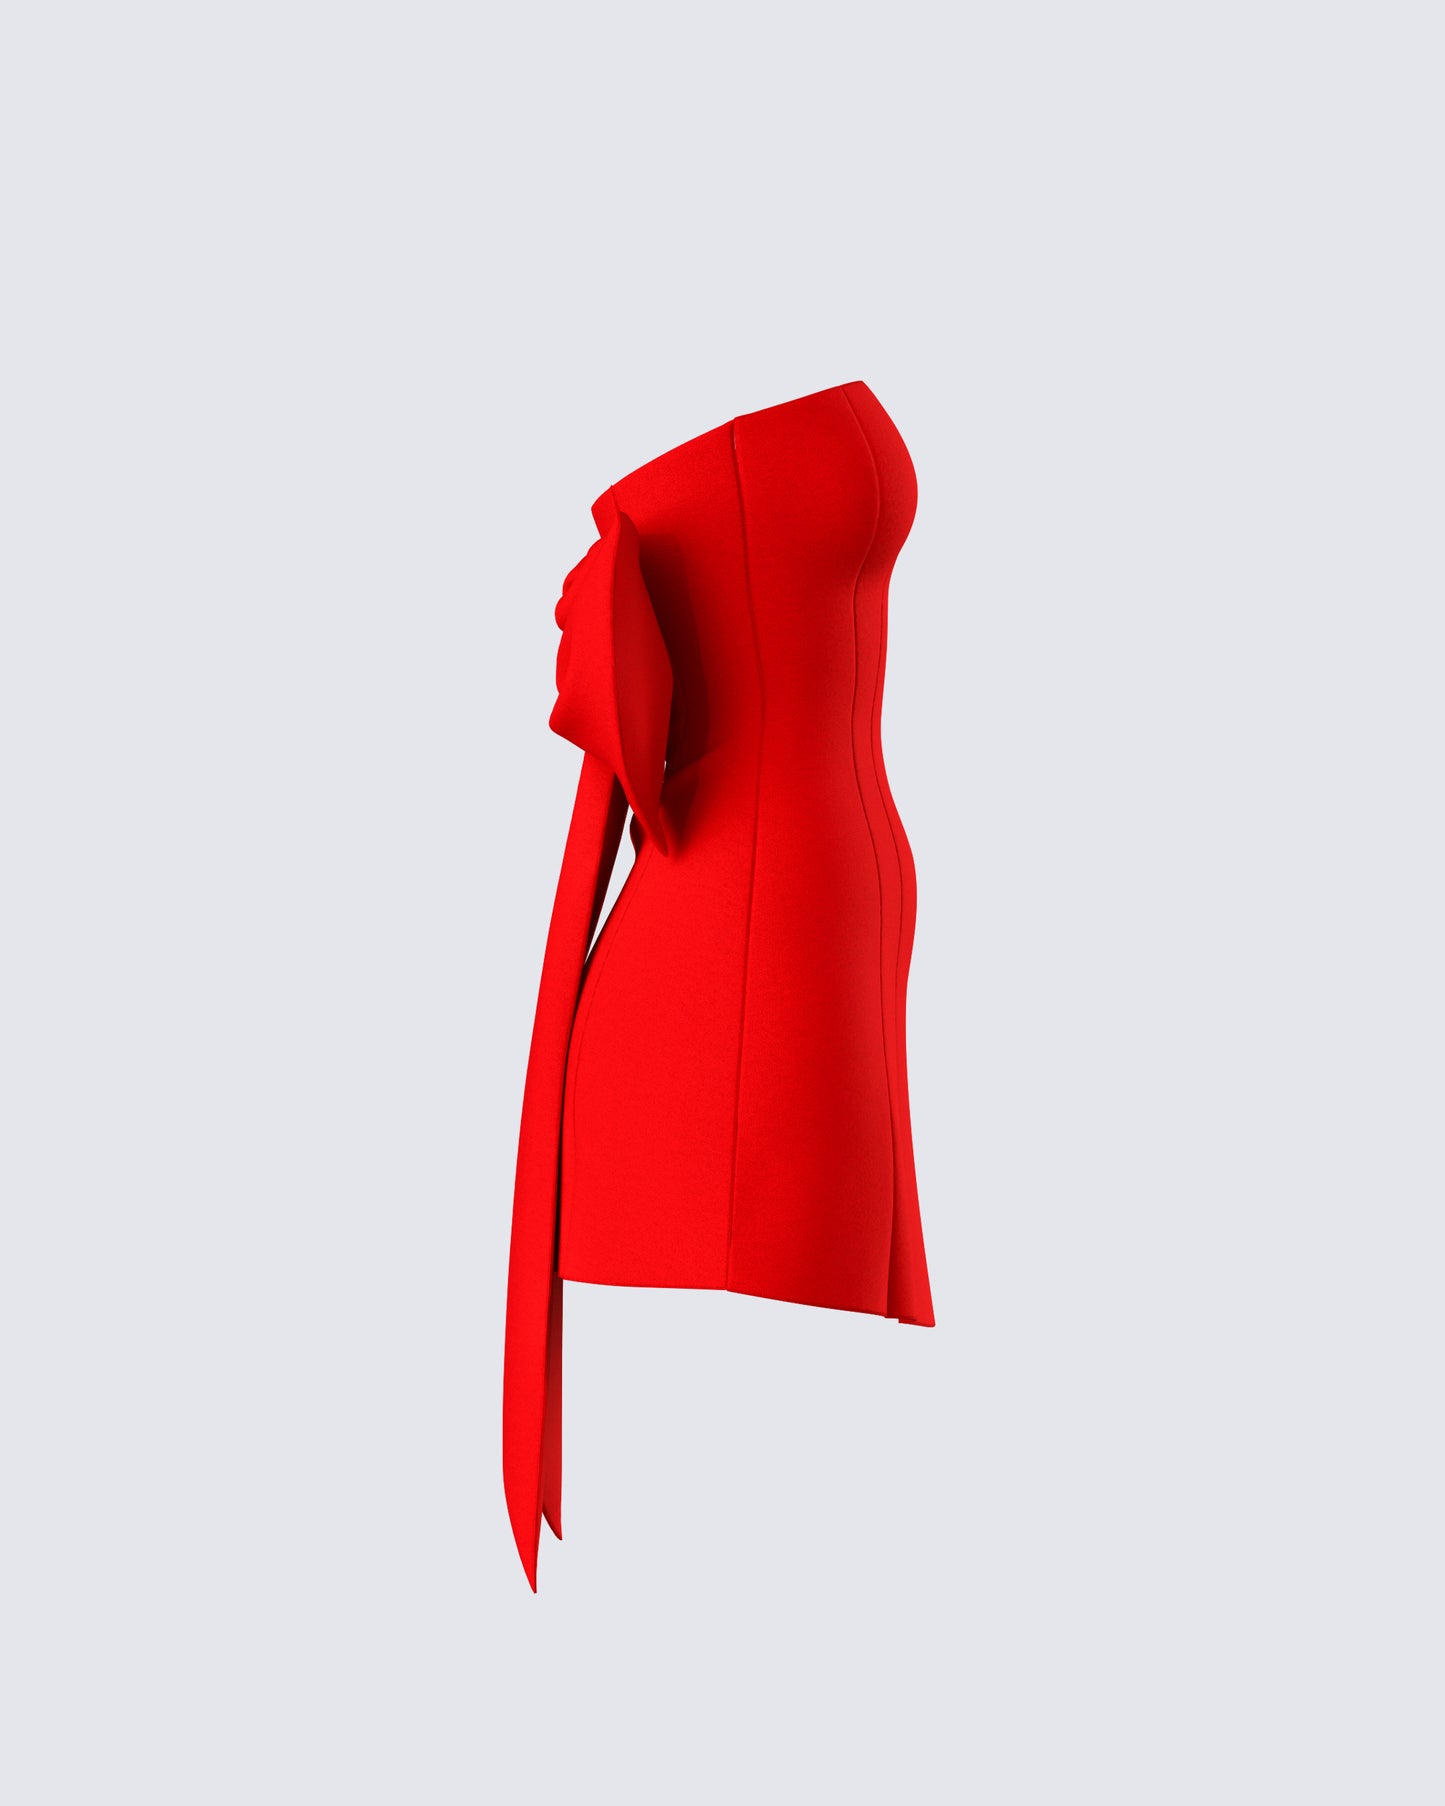 McKay Red Strapless Bow Mini Dress